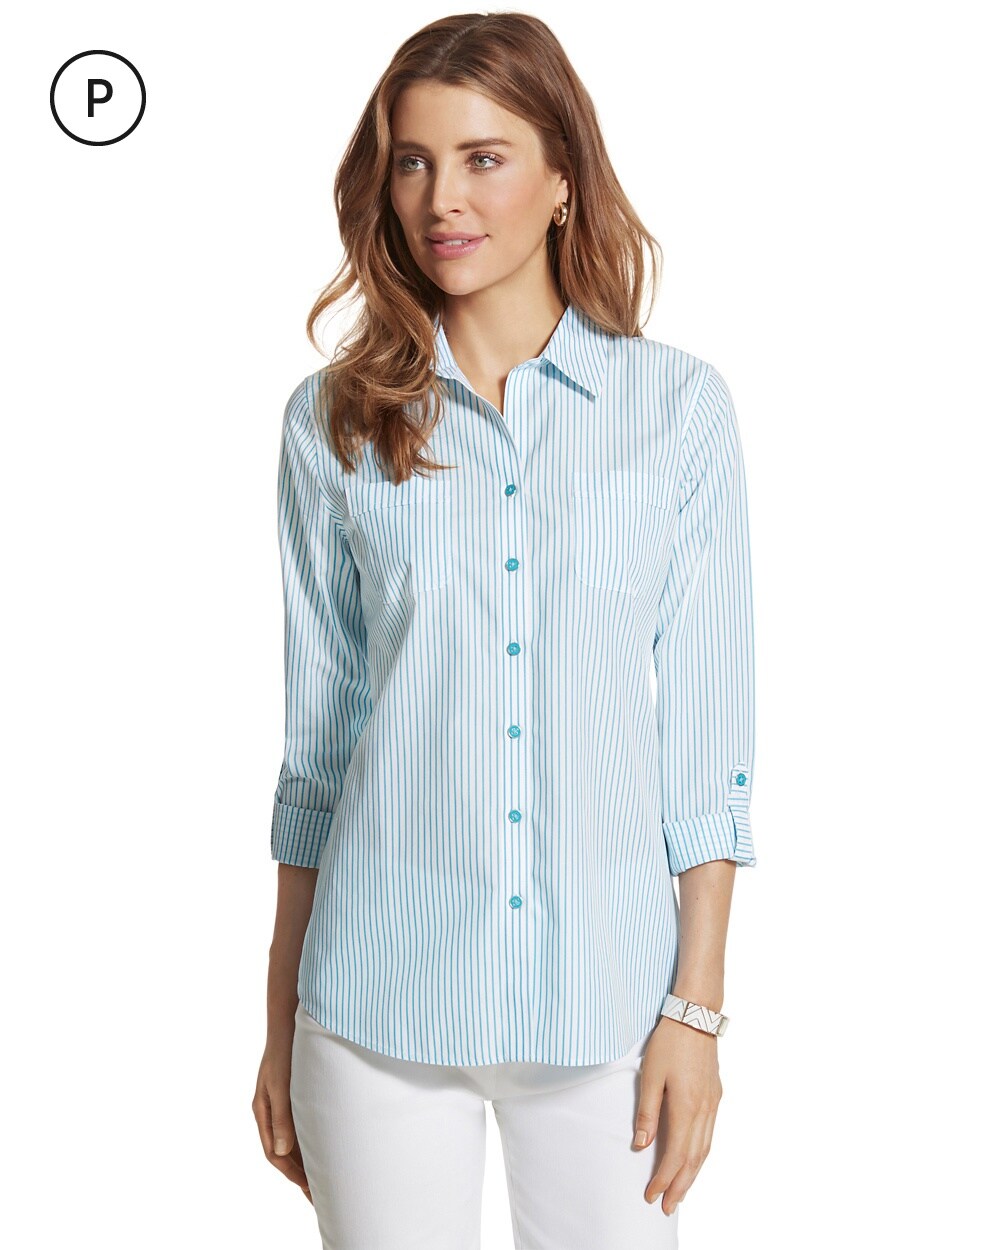 Petite Effortless Sleek Striped Wrinkle-Free Shirt